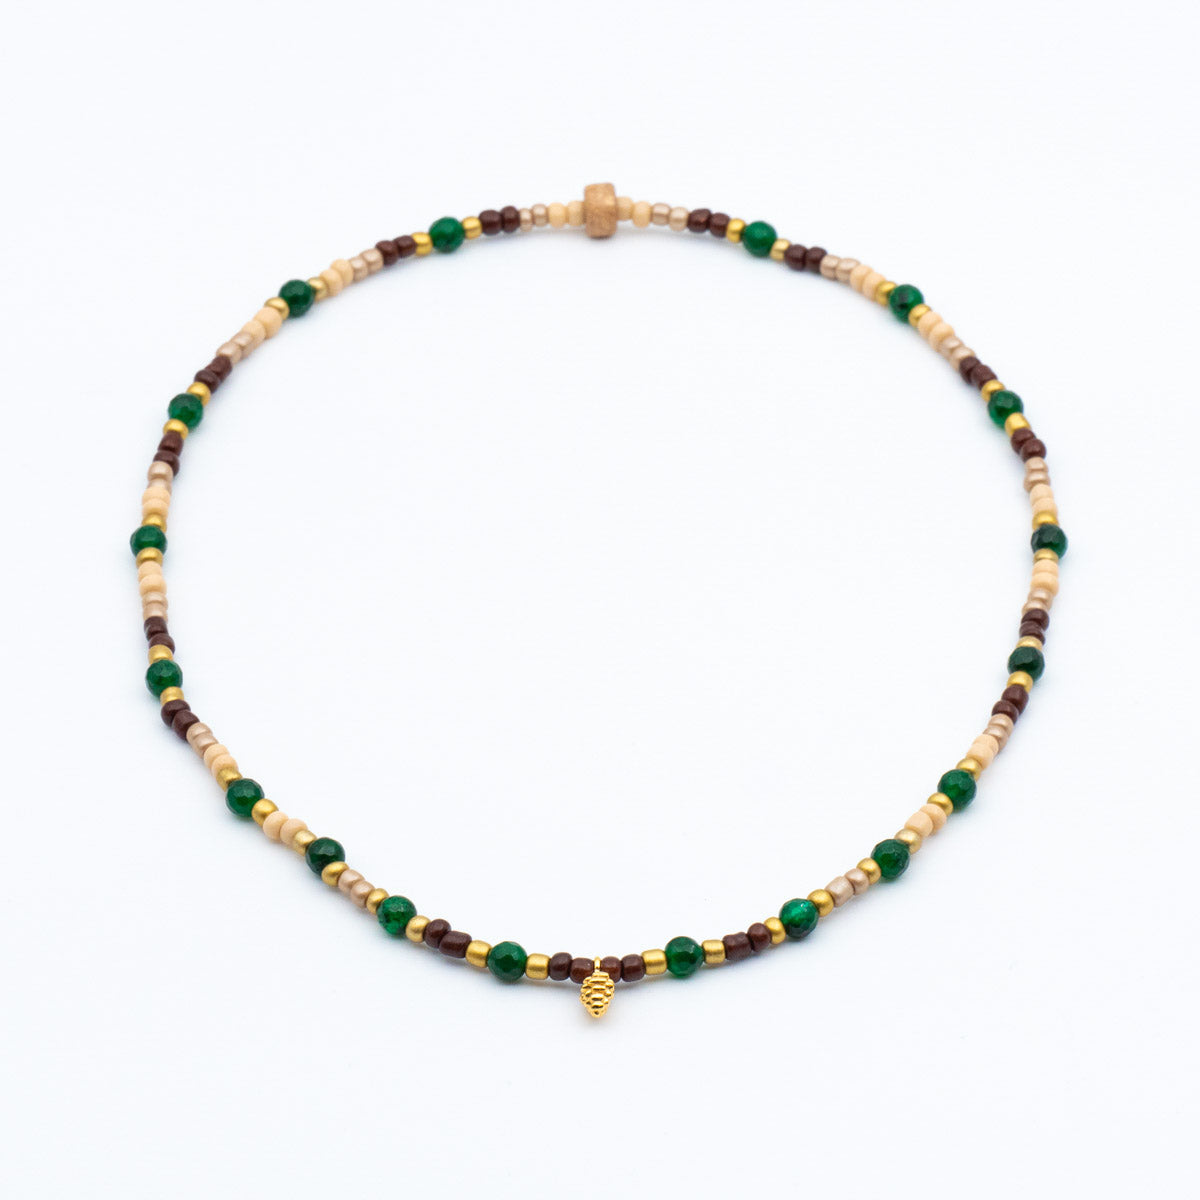 Necklace - Jade healing stone